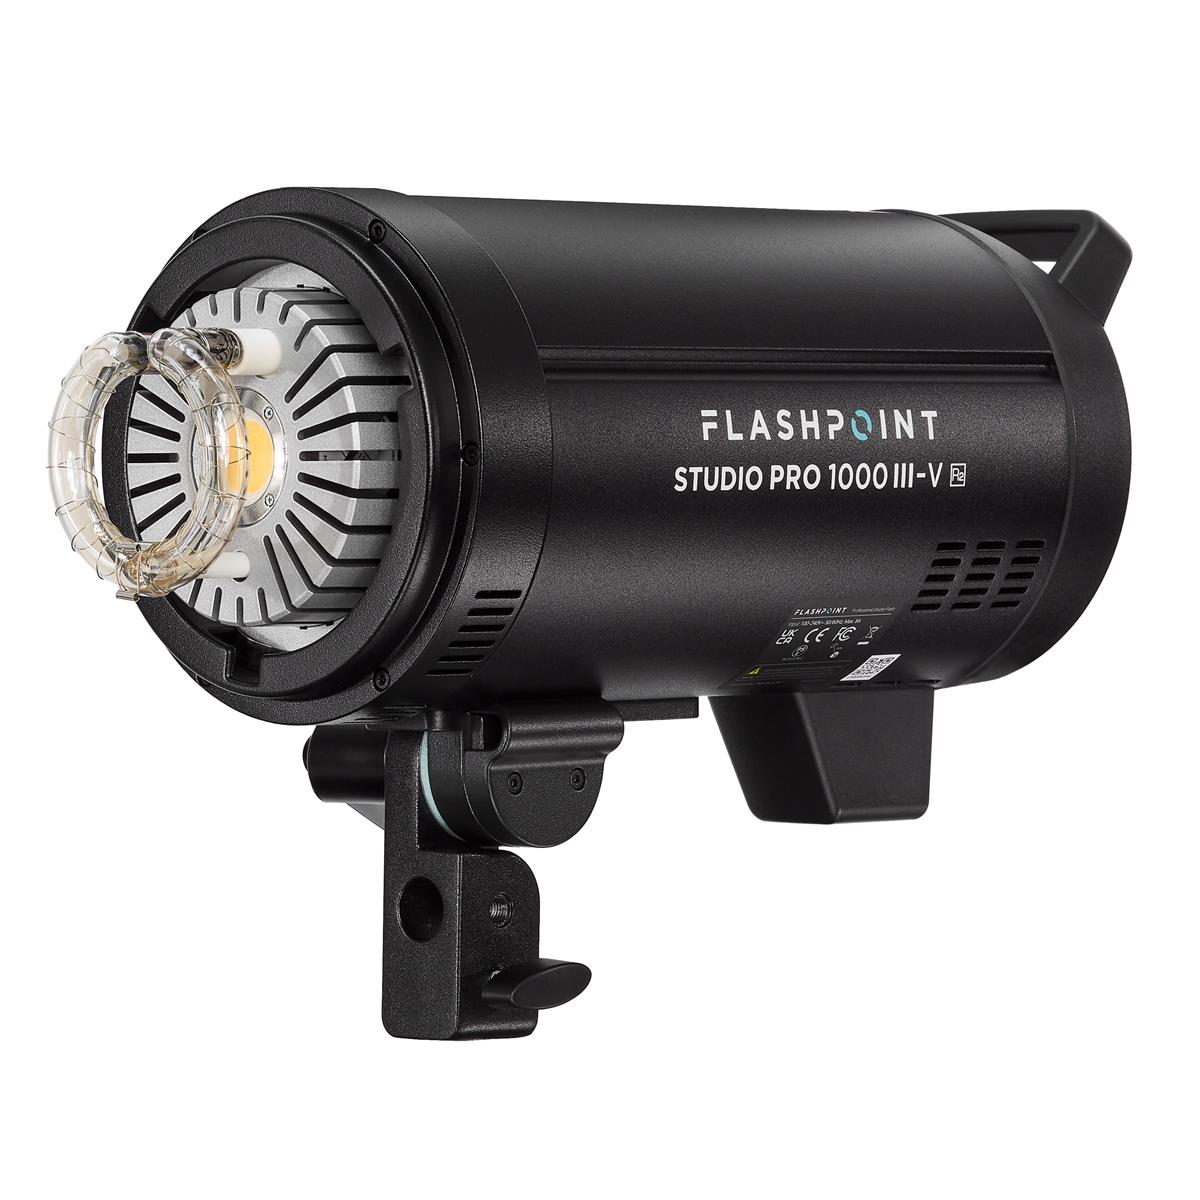 Image of Flashpoint Studio Pro 1000 III-V 1000Ws R2 Monolight Flash